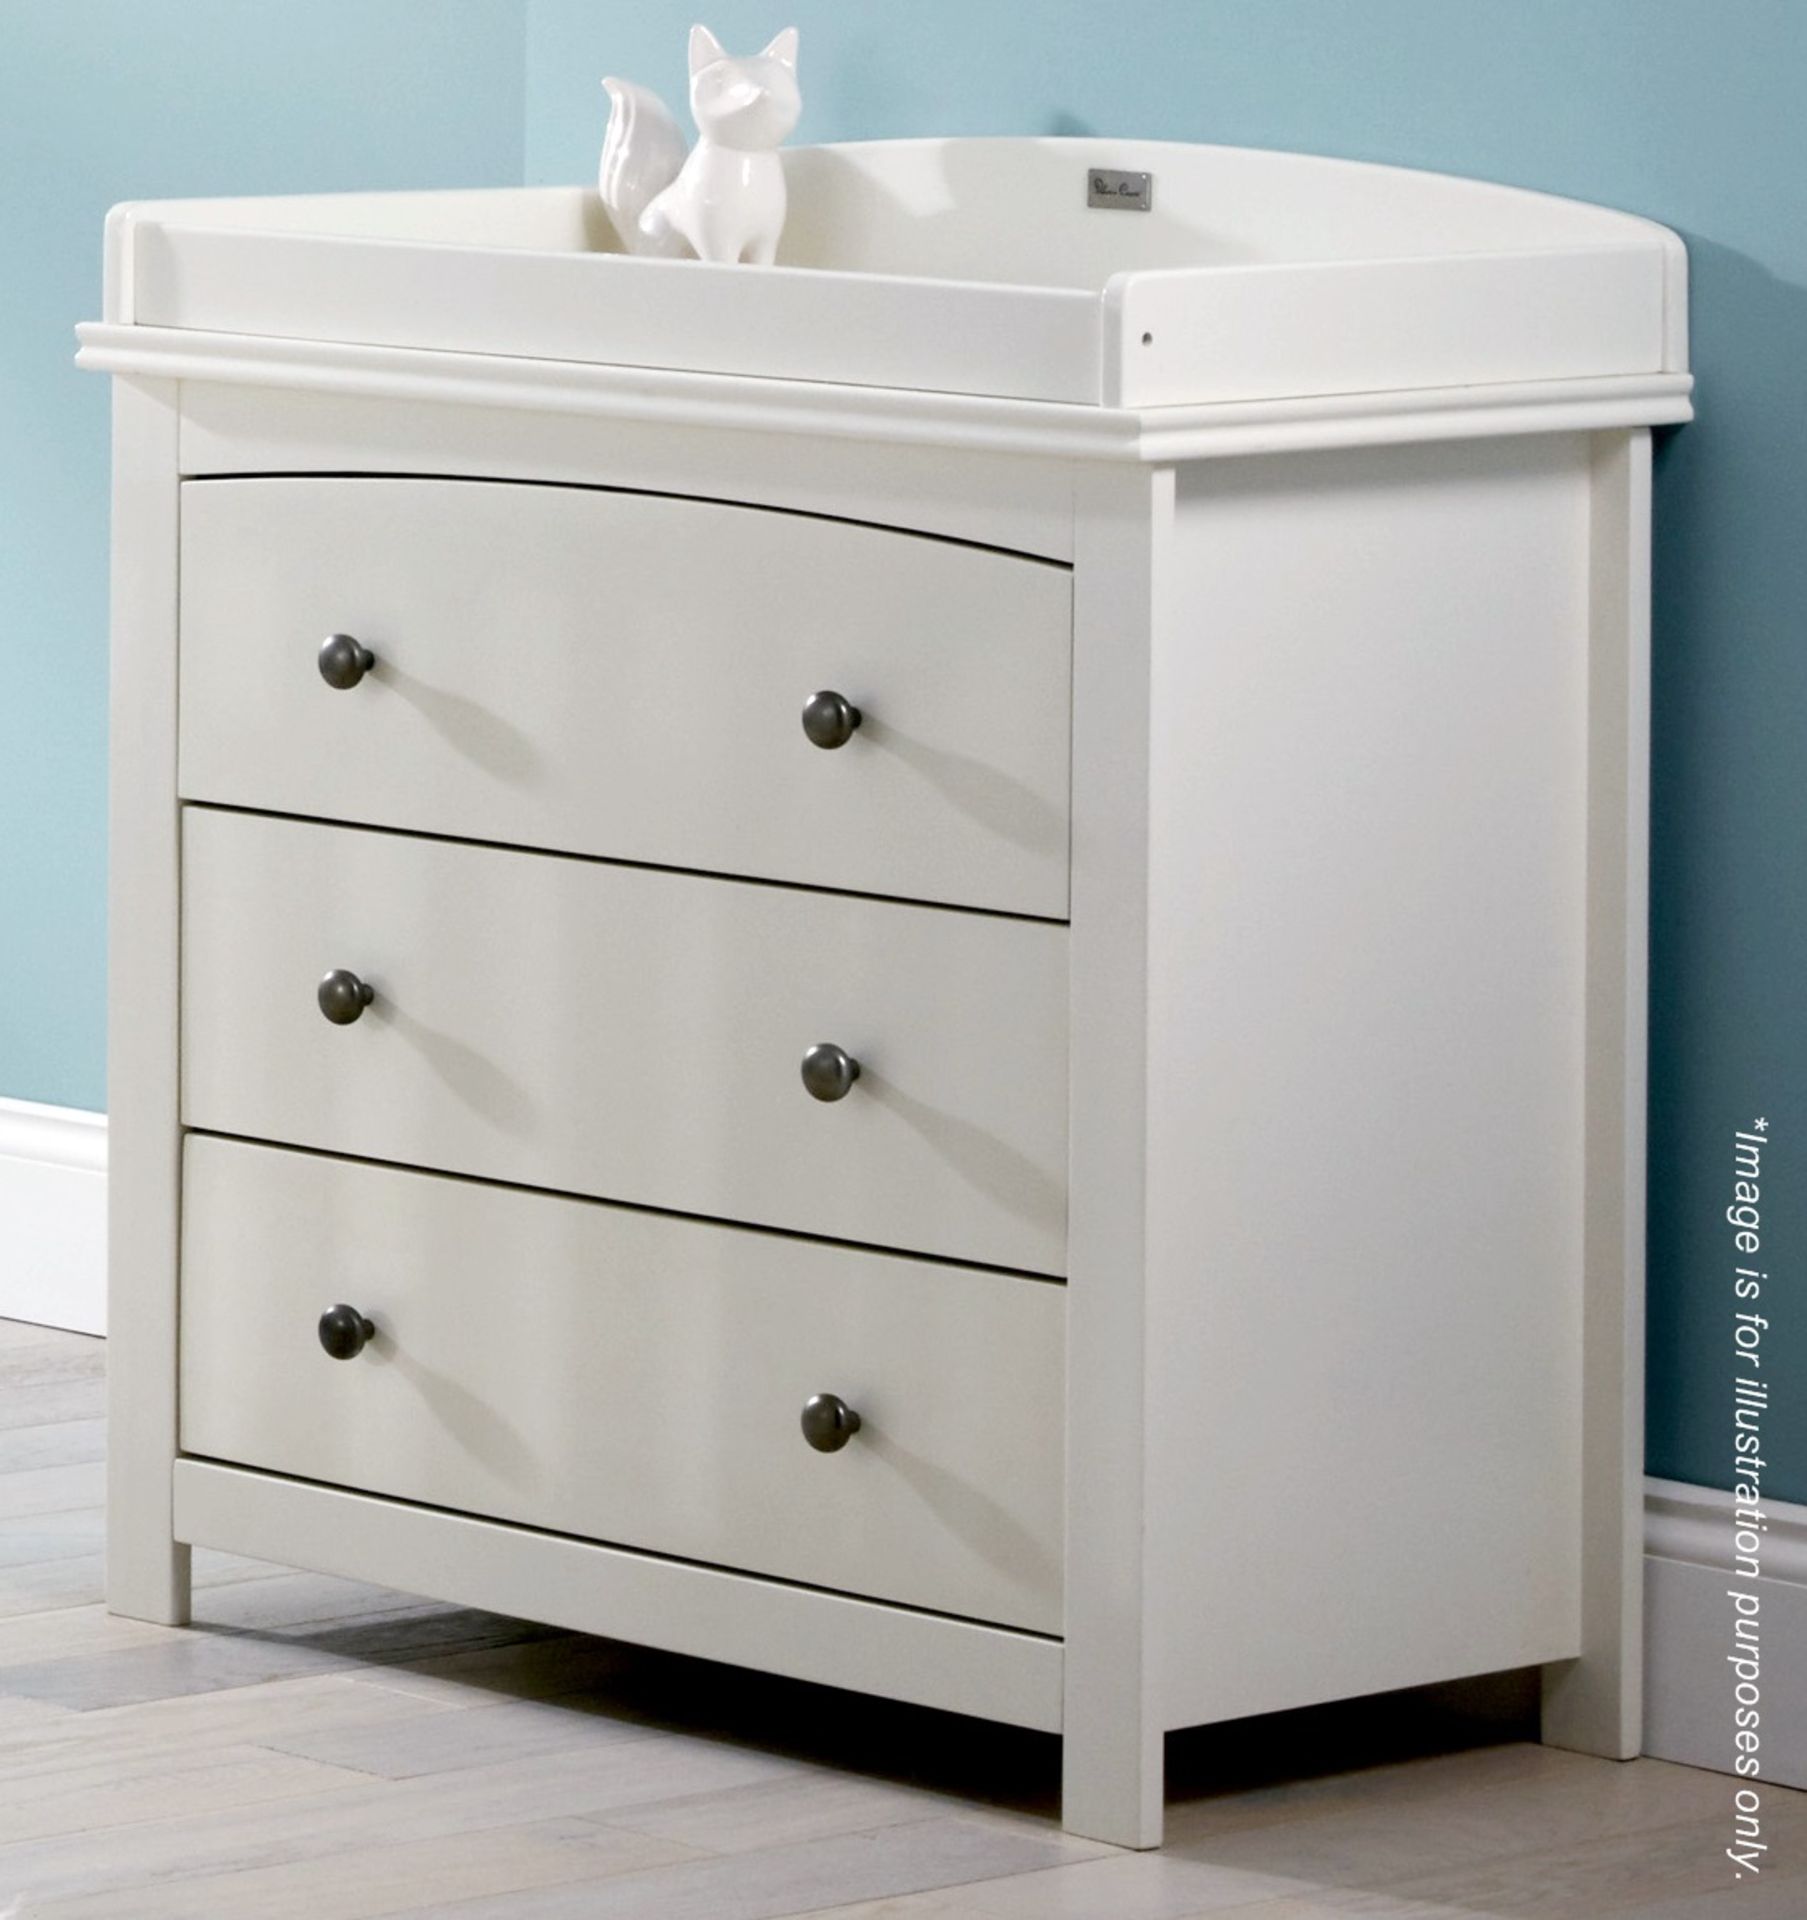 1 x Silver Cross Ashby Style Dresser Nursery Furniture - CL185 - Ref: DSY0230 - Location: Stoke-on-